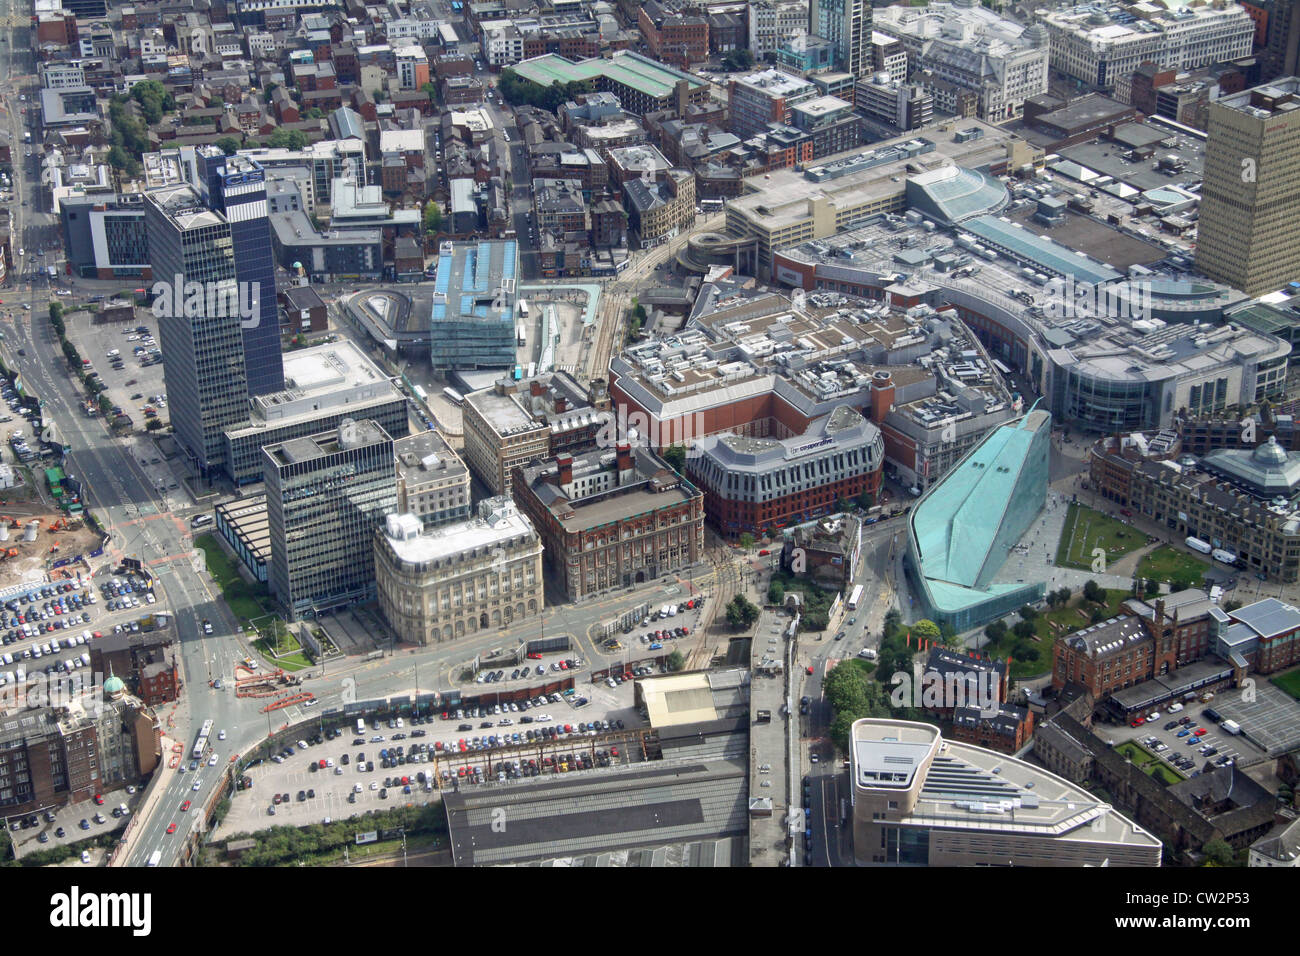 Vista aérea del centro de la ciudad de Manchester, zona de Deansgate Foto de stock